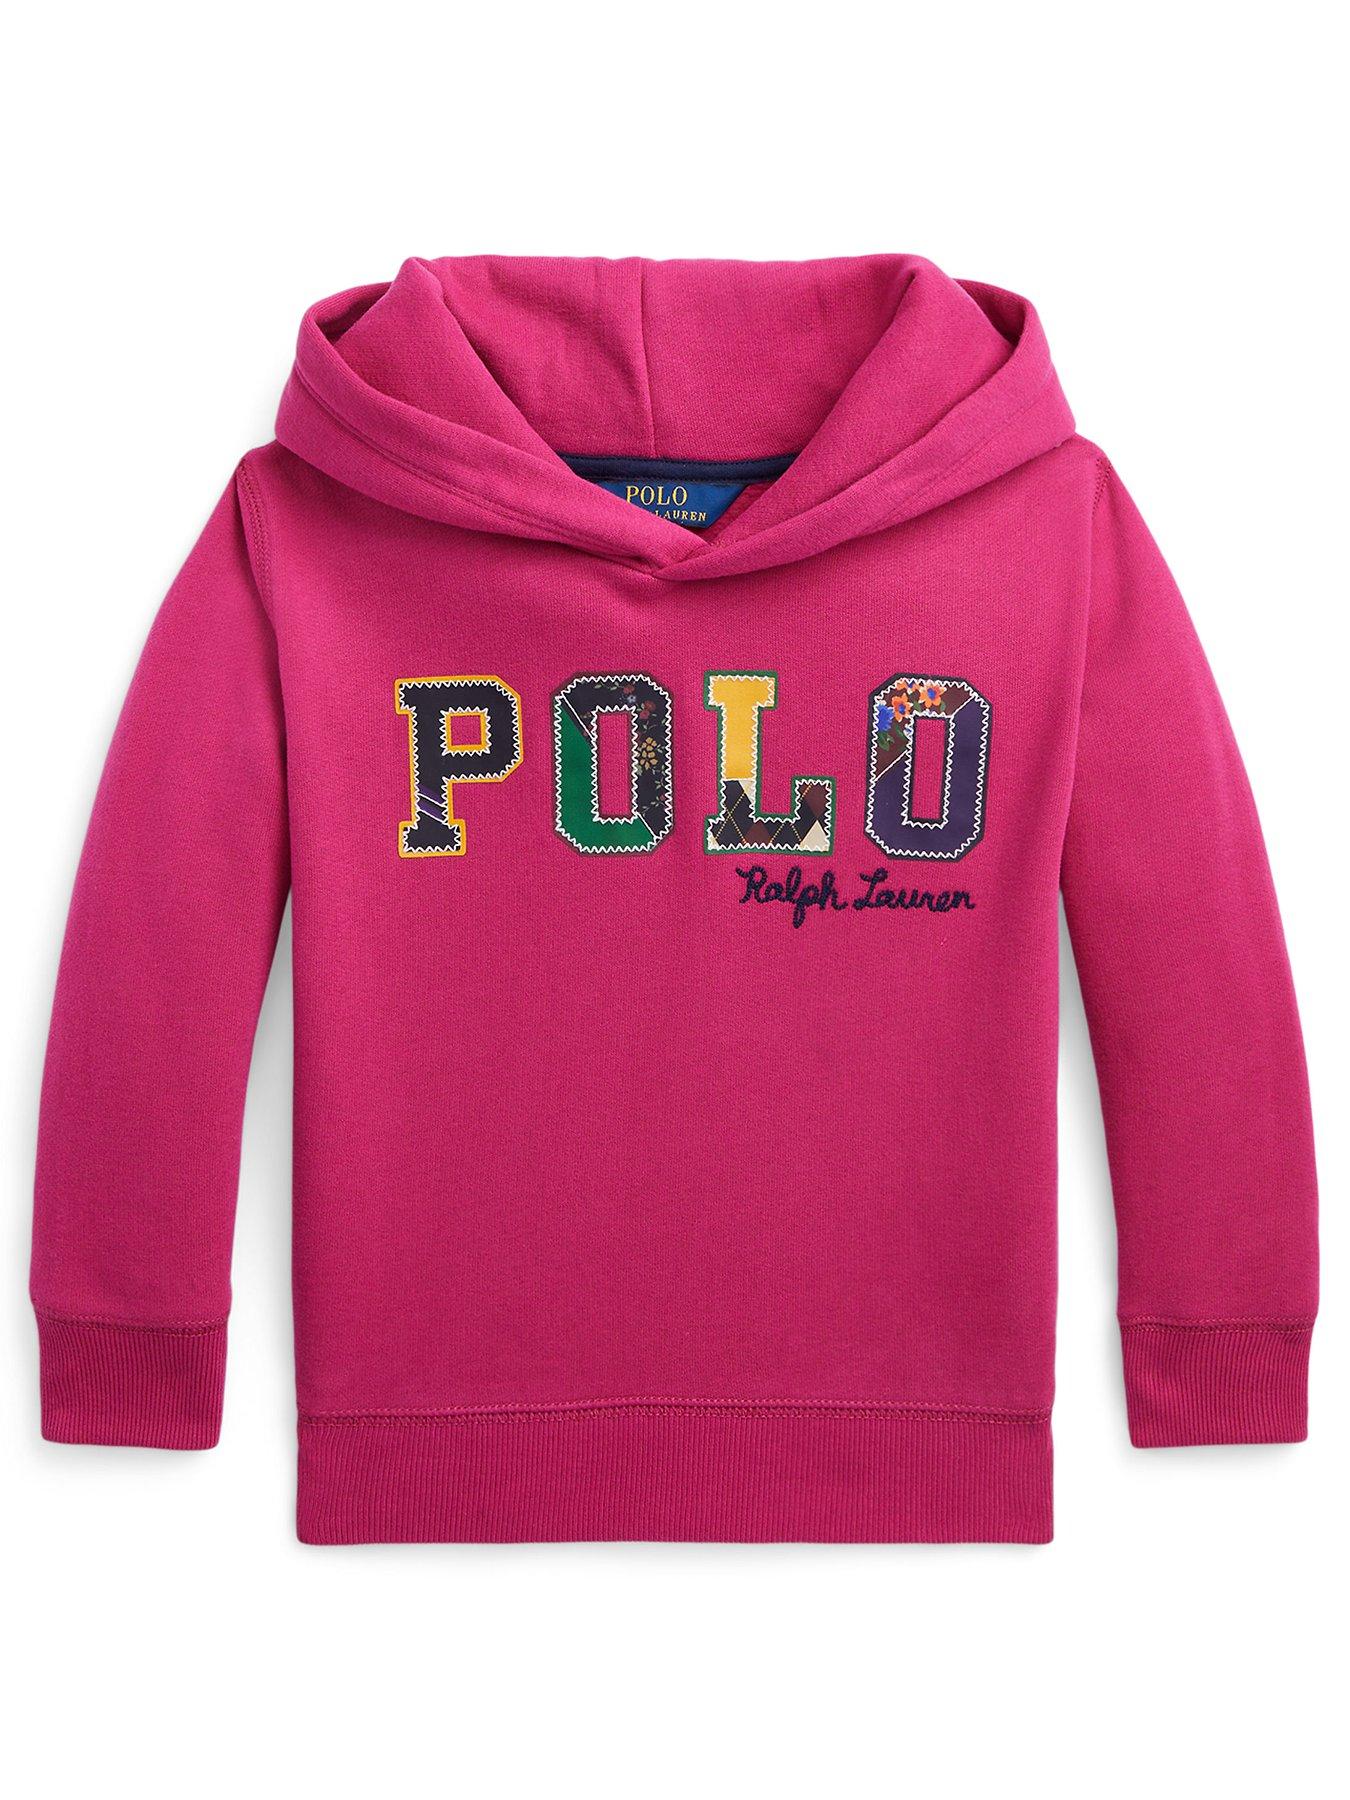 Polo Ralph Lauren Girls Neon dye sweatpants sz small 7 New! Hot magenta Pink